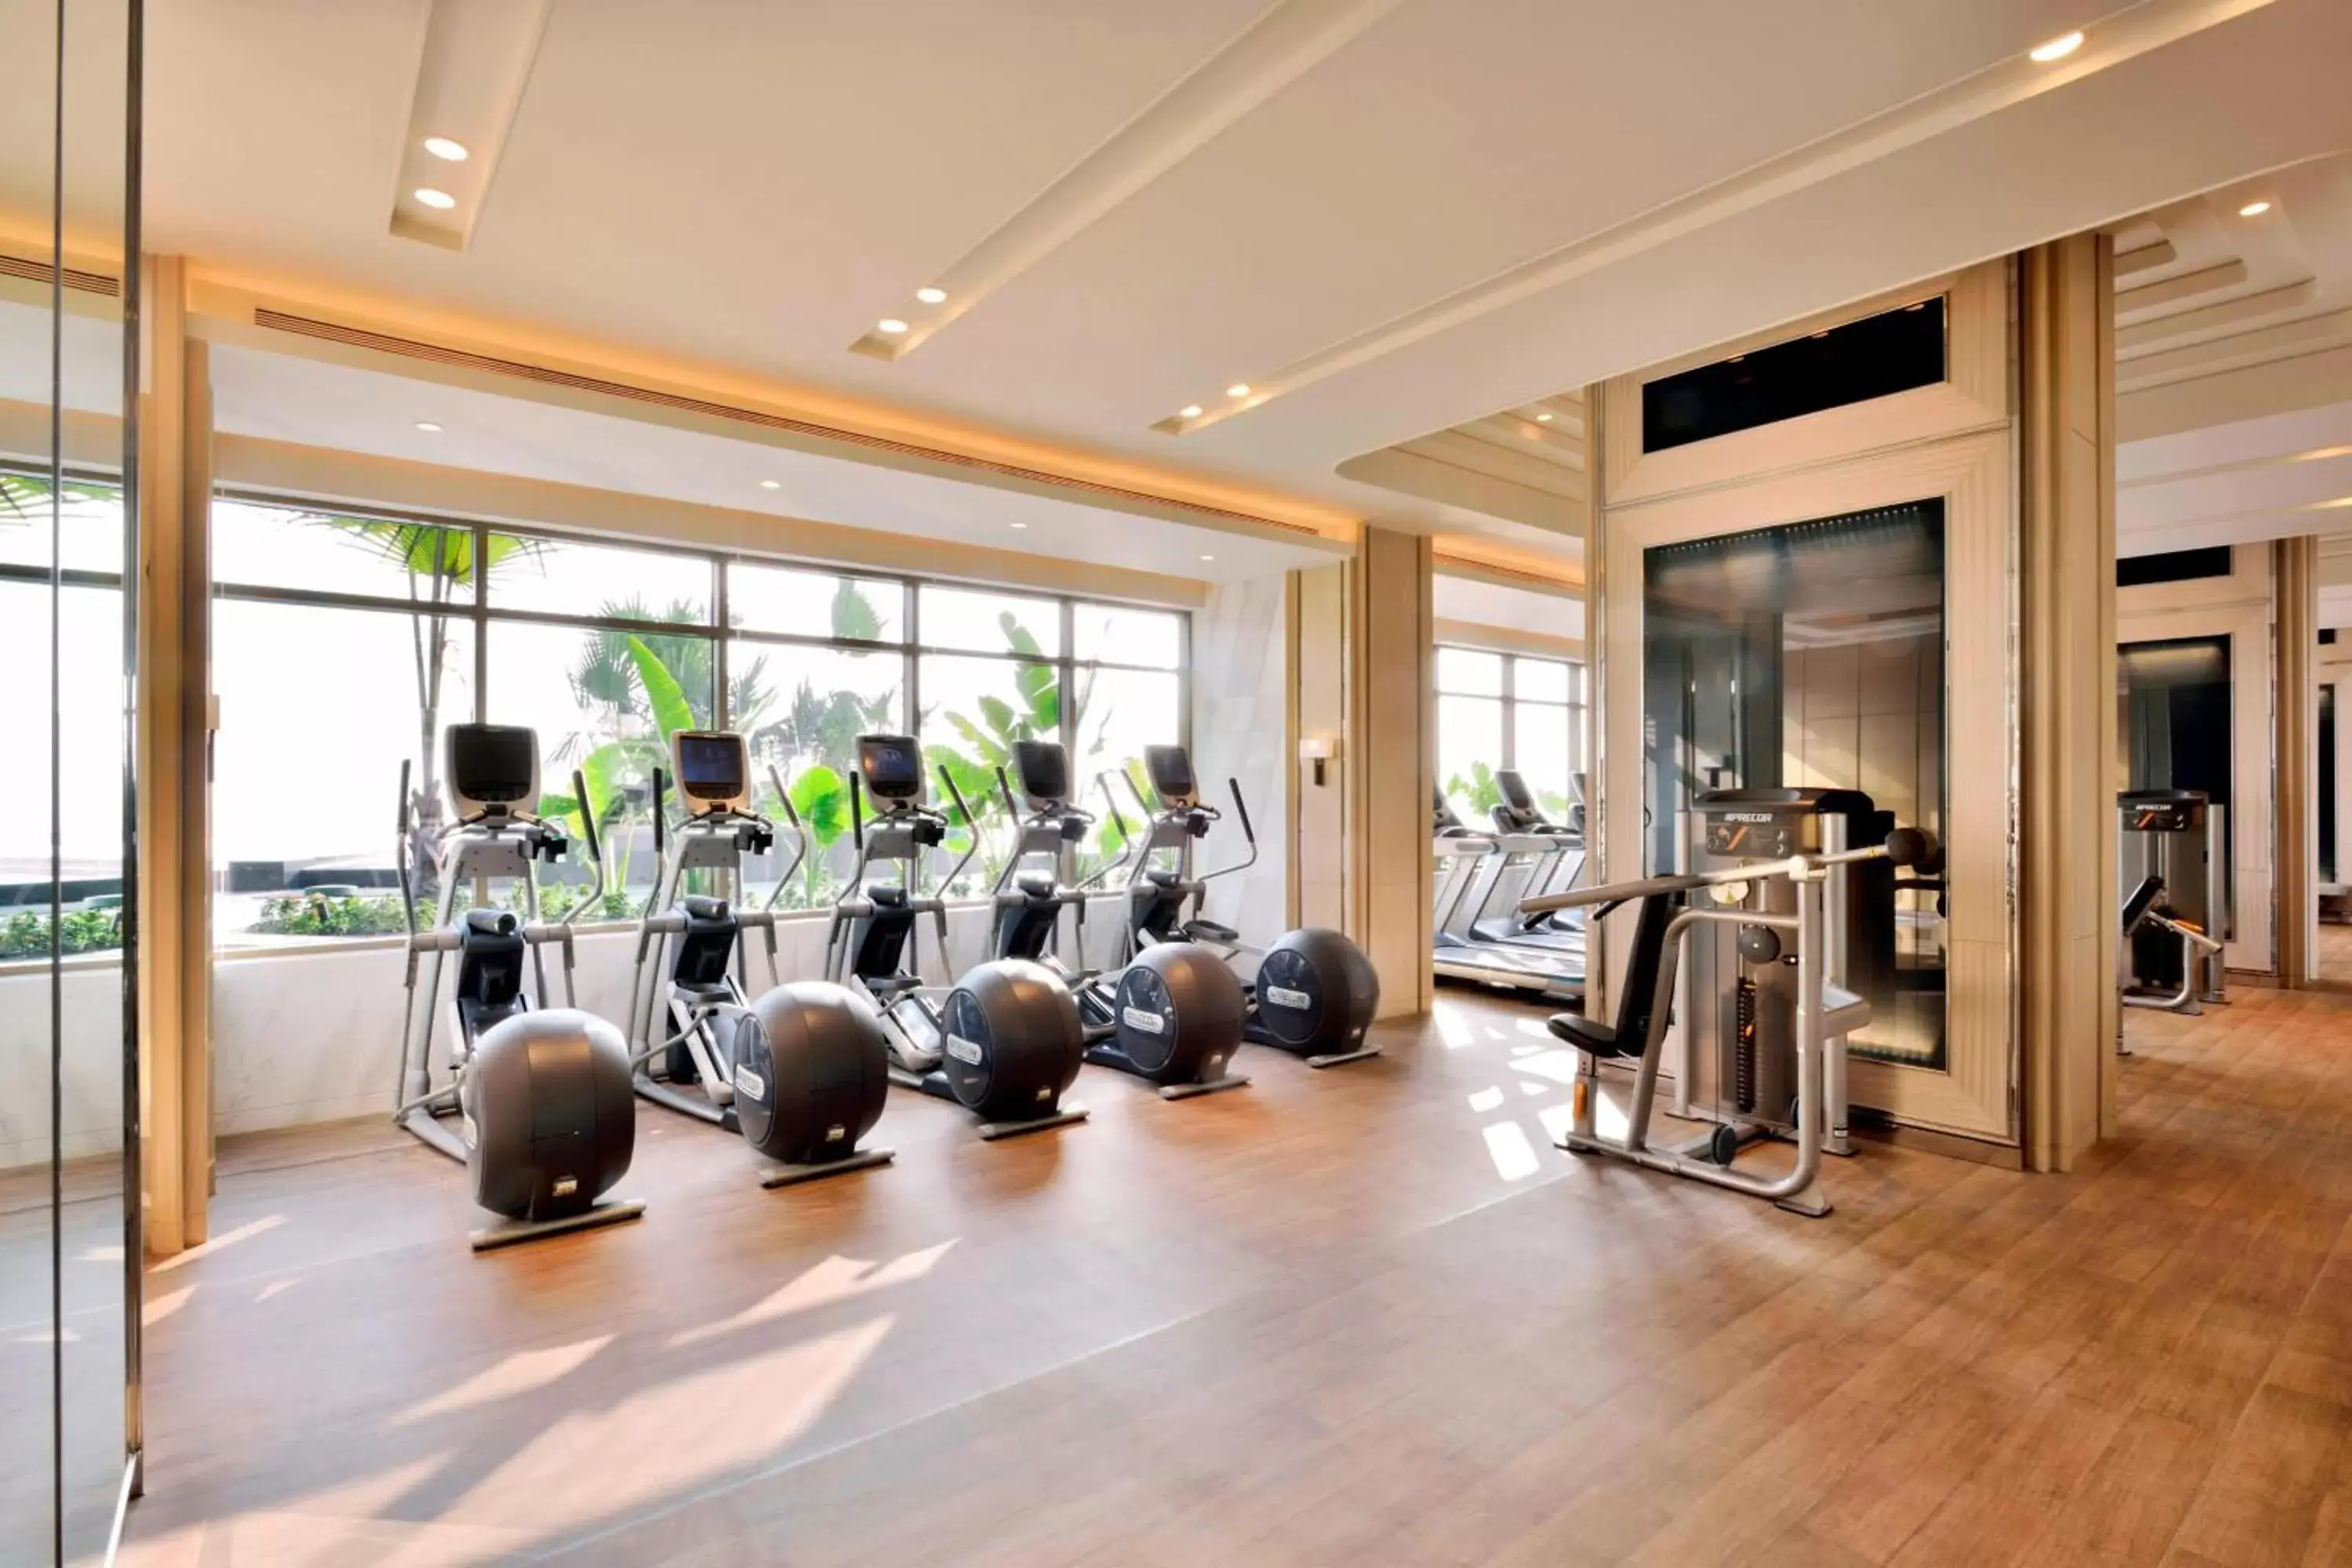 Fitness centre/facilities, Fitness Center/Facilities in JW Marriott Hotel Kolkata